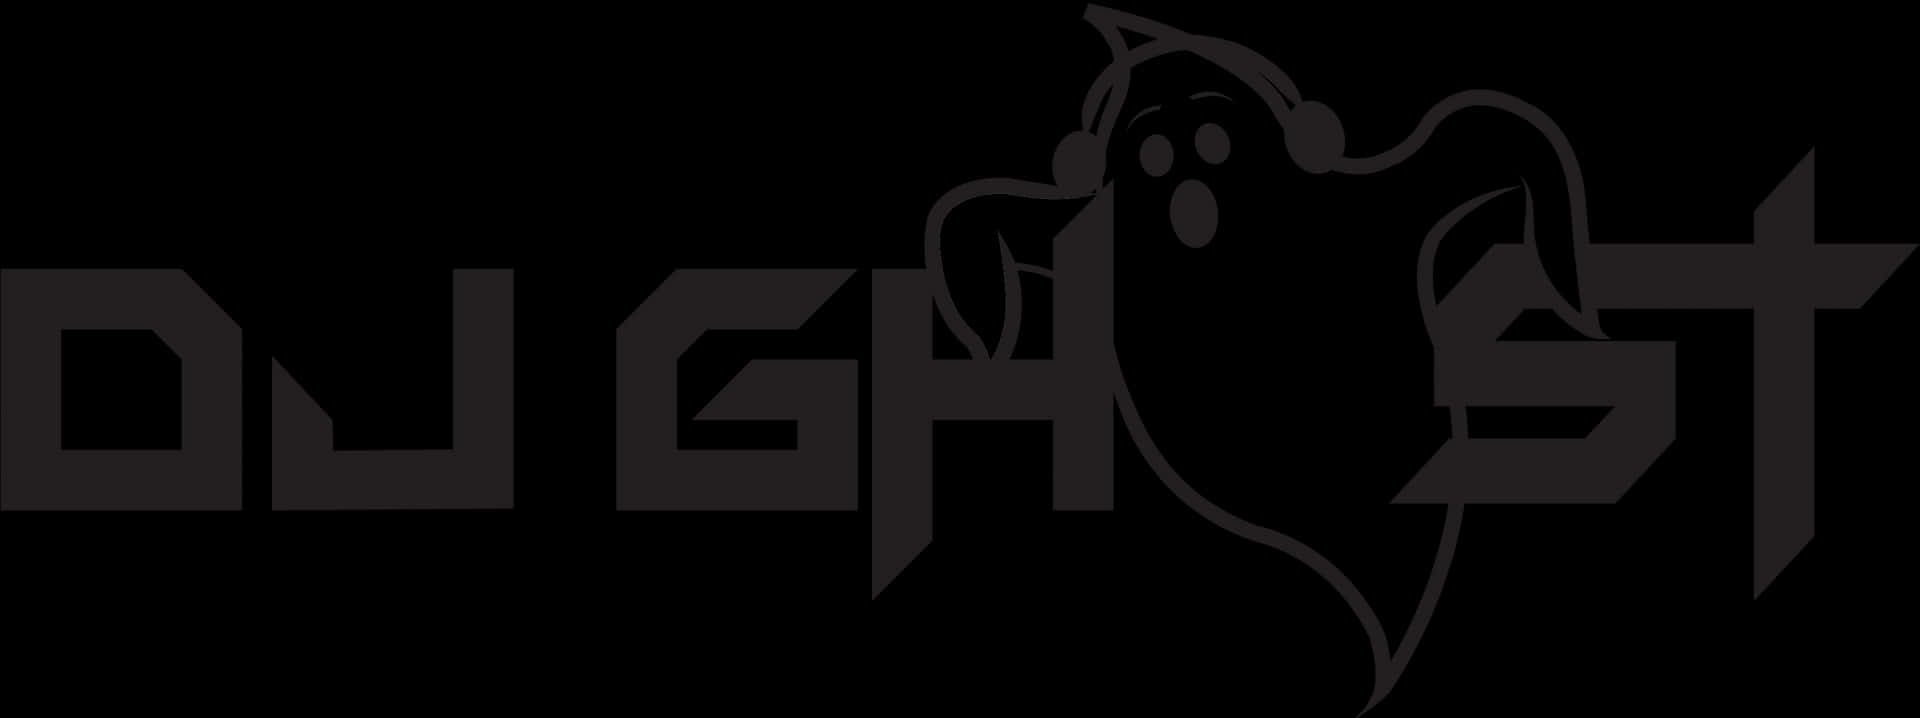 Ghost Logo Black Background PNG